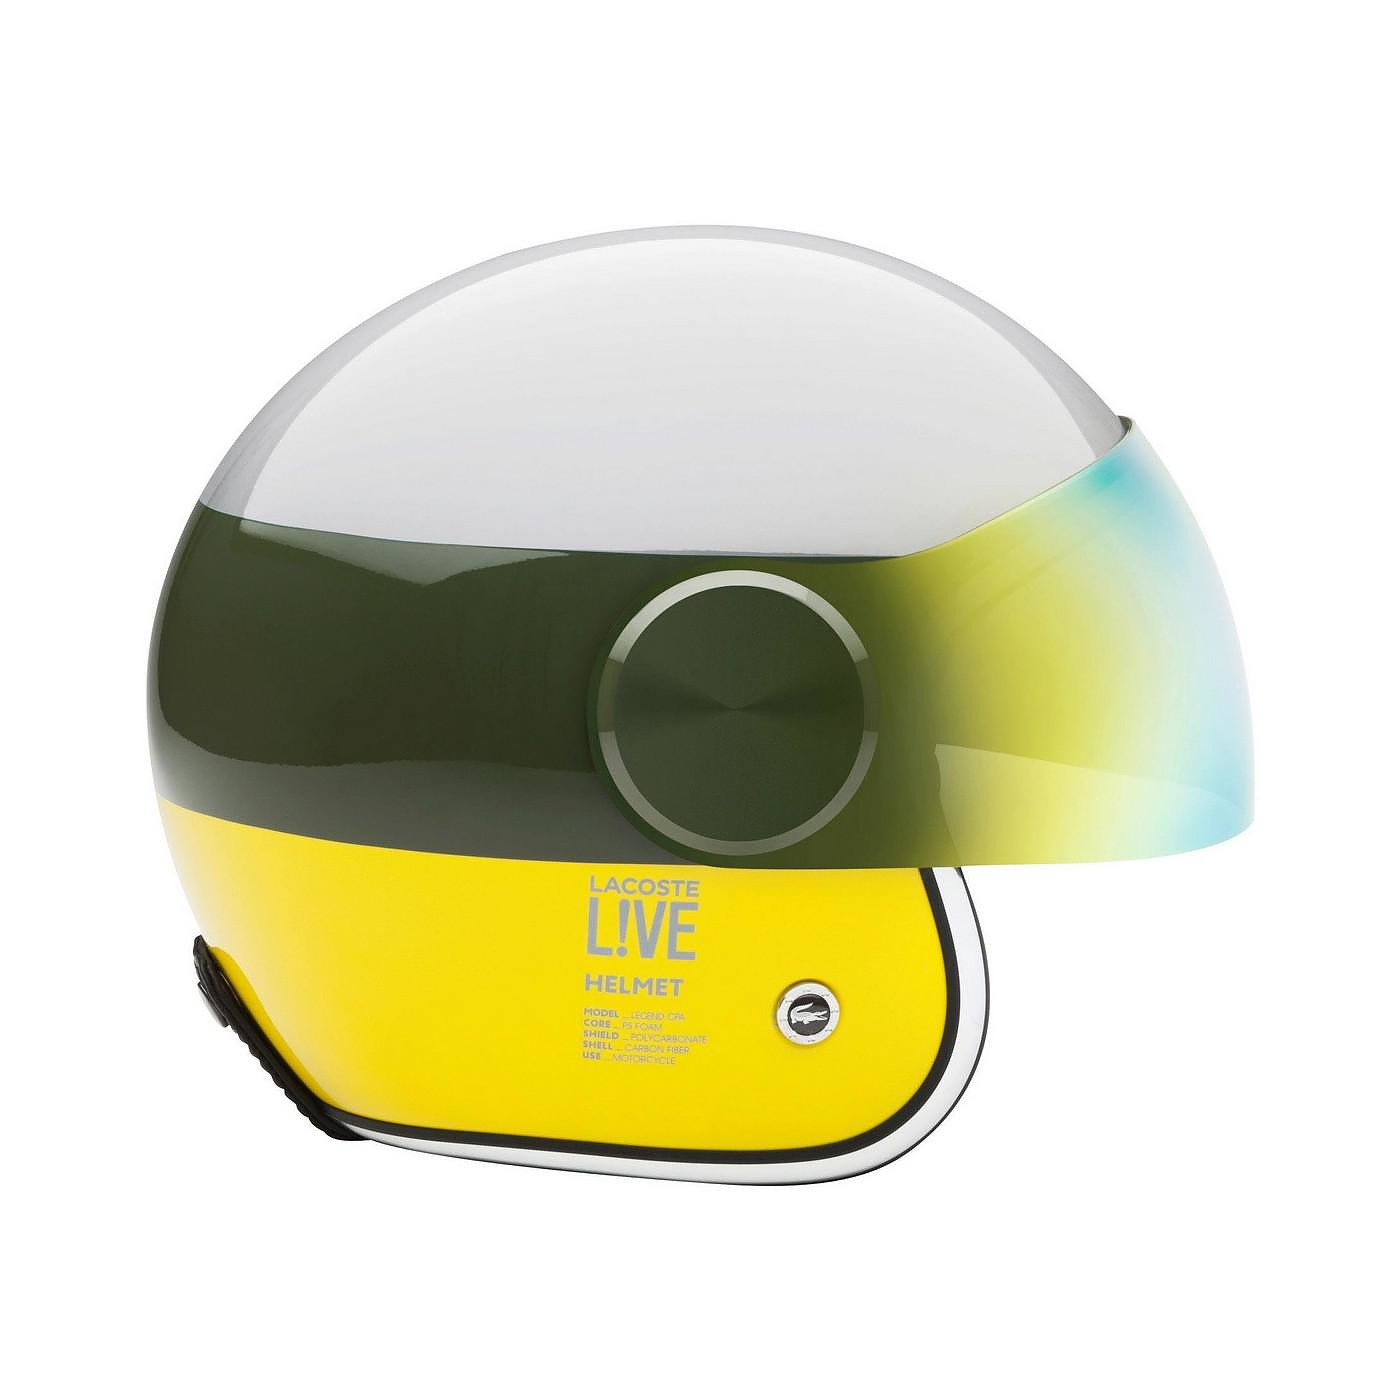 Lacoste Lab for Lacoste L!VE Helmet Collection.